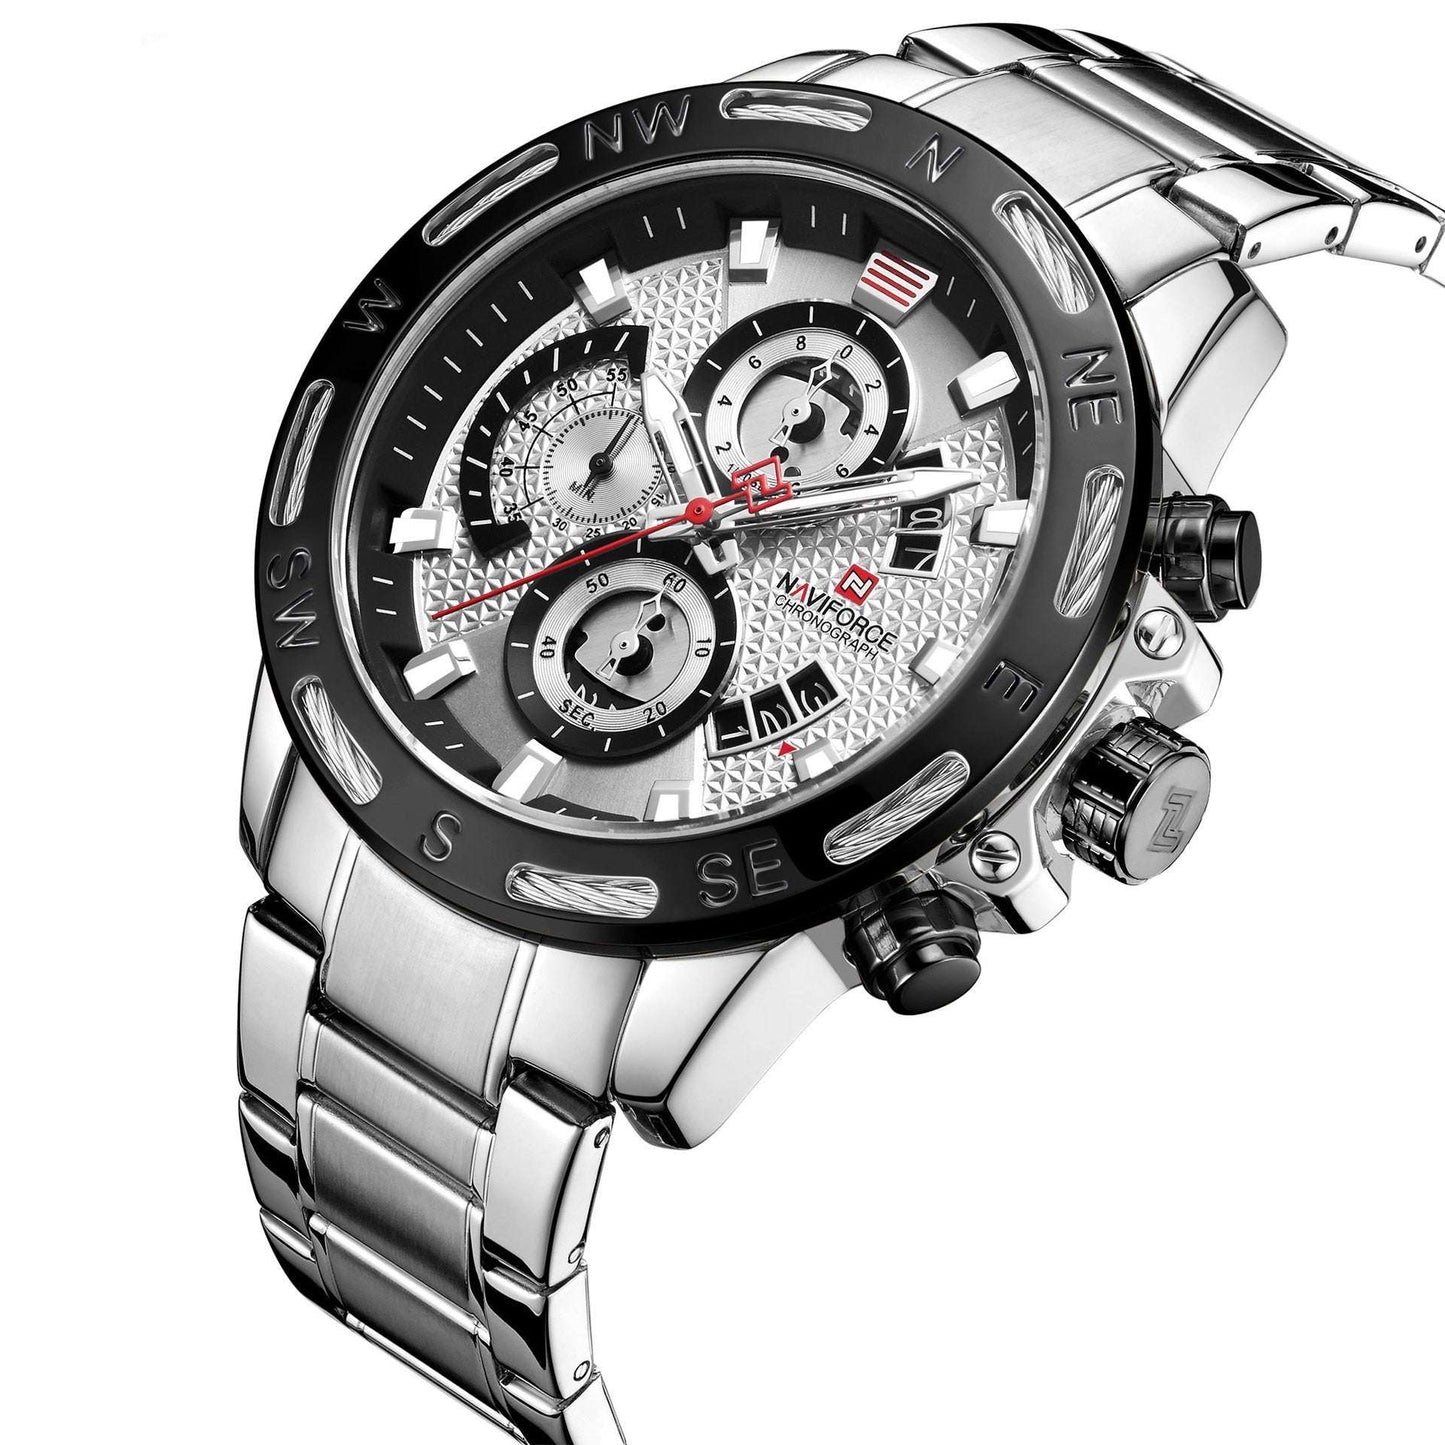 Multifunctional Quartz Watch, Stylish Men's Watch, Waterproof Men's Watch - available at Sparq Mart